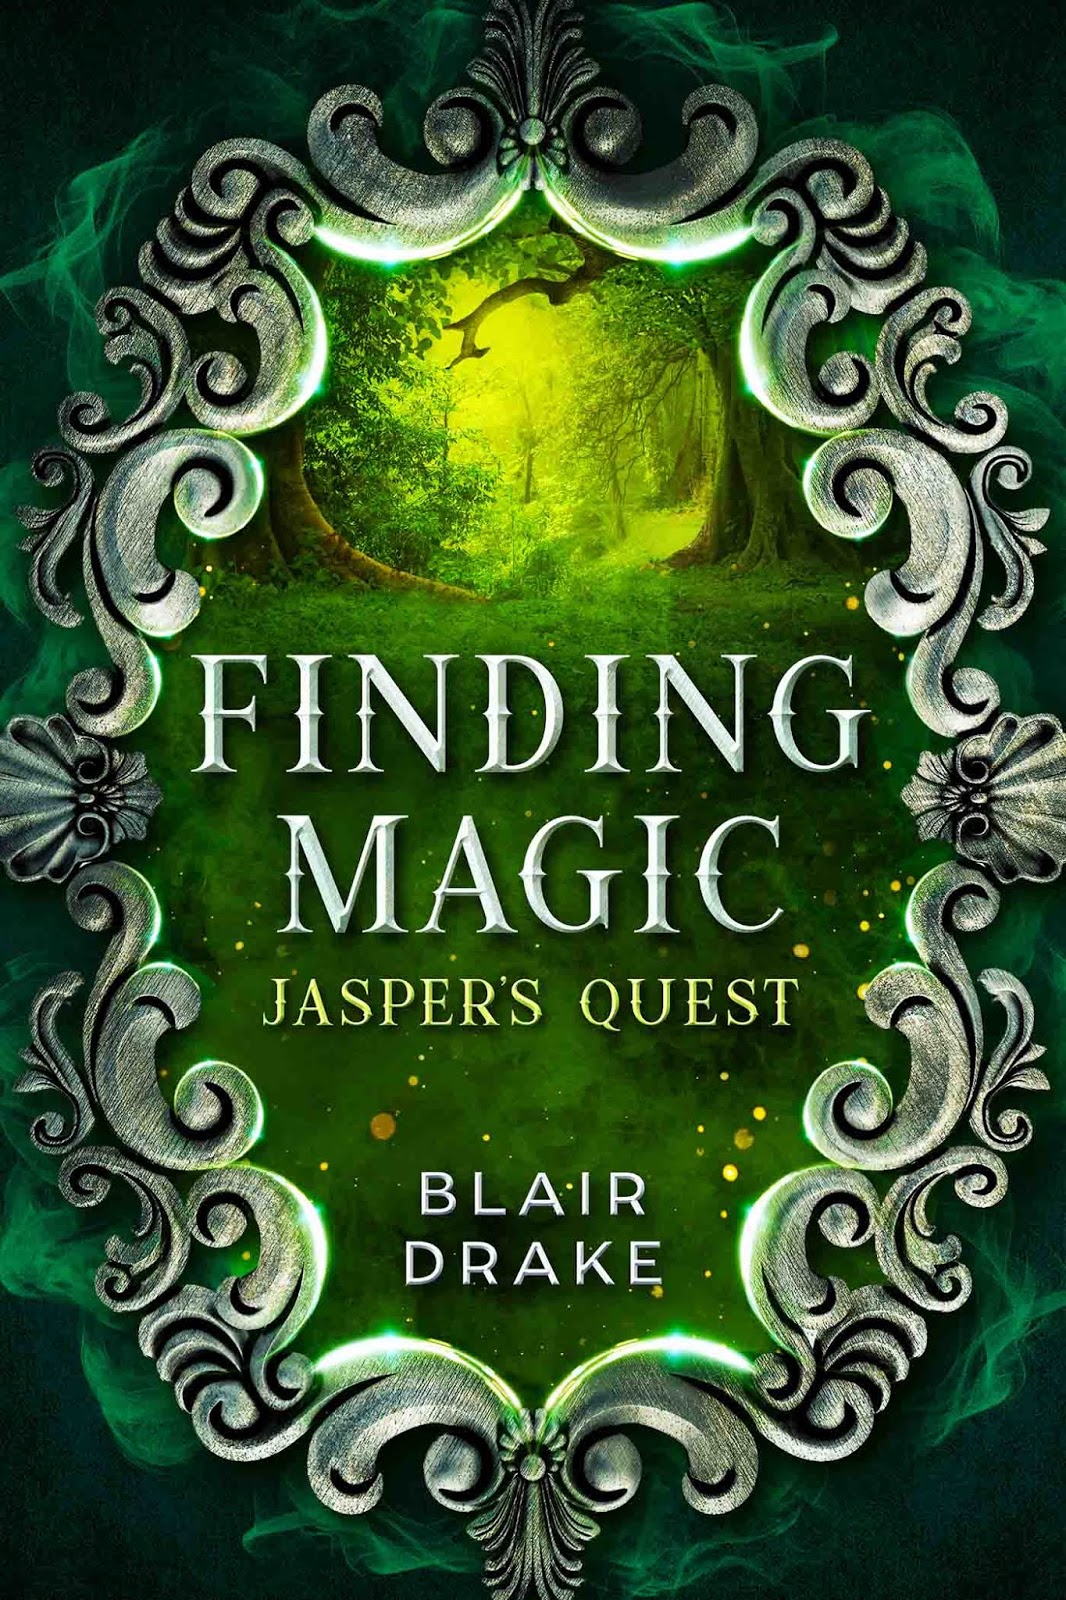 Find the magic. Зелёная магия книга. Волшебная книга квестов. Magic book Формат.